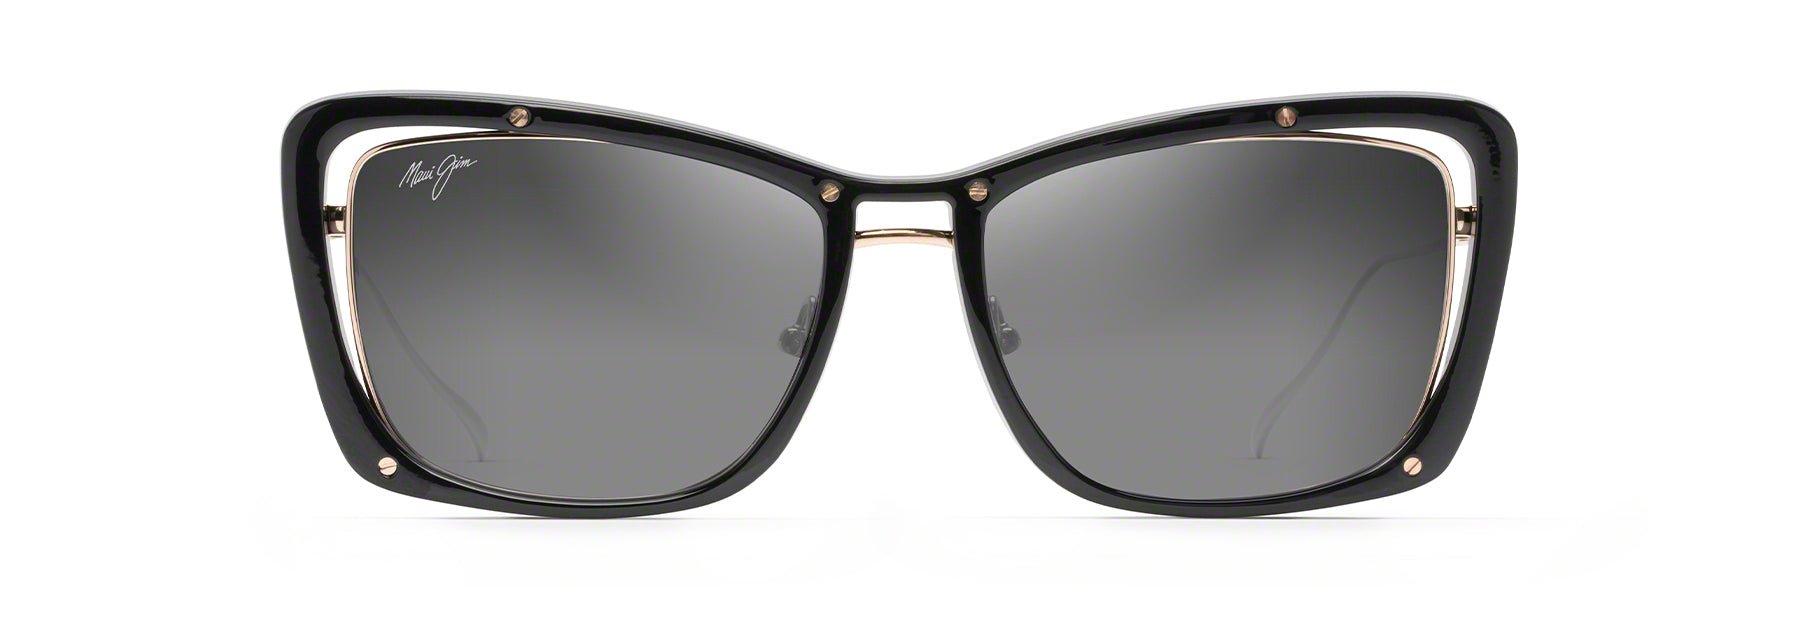 Maui Jim Adrift Sunglasses